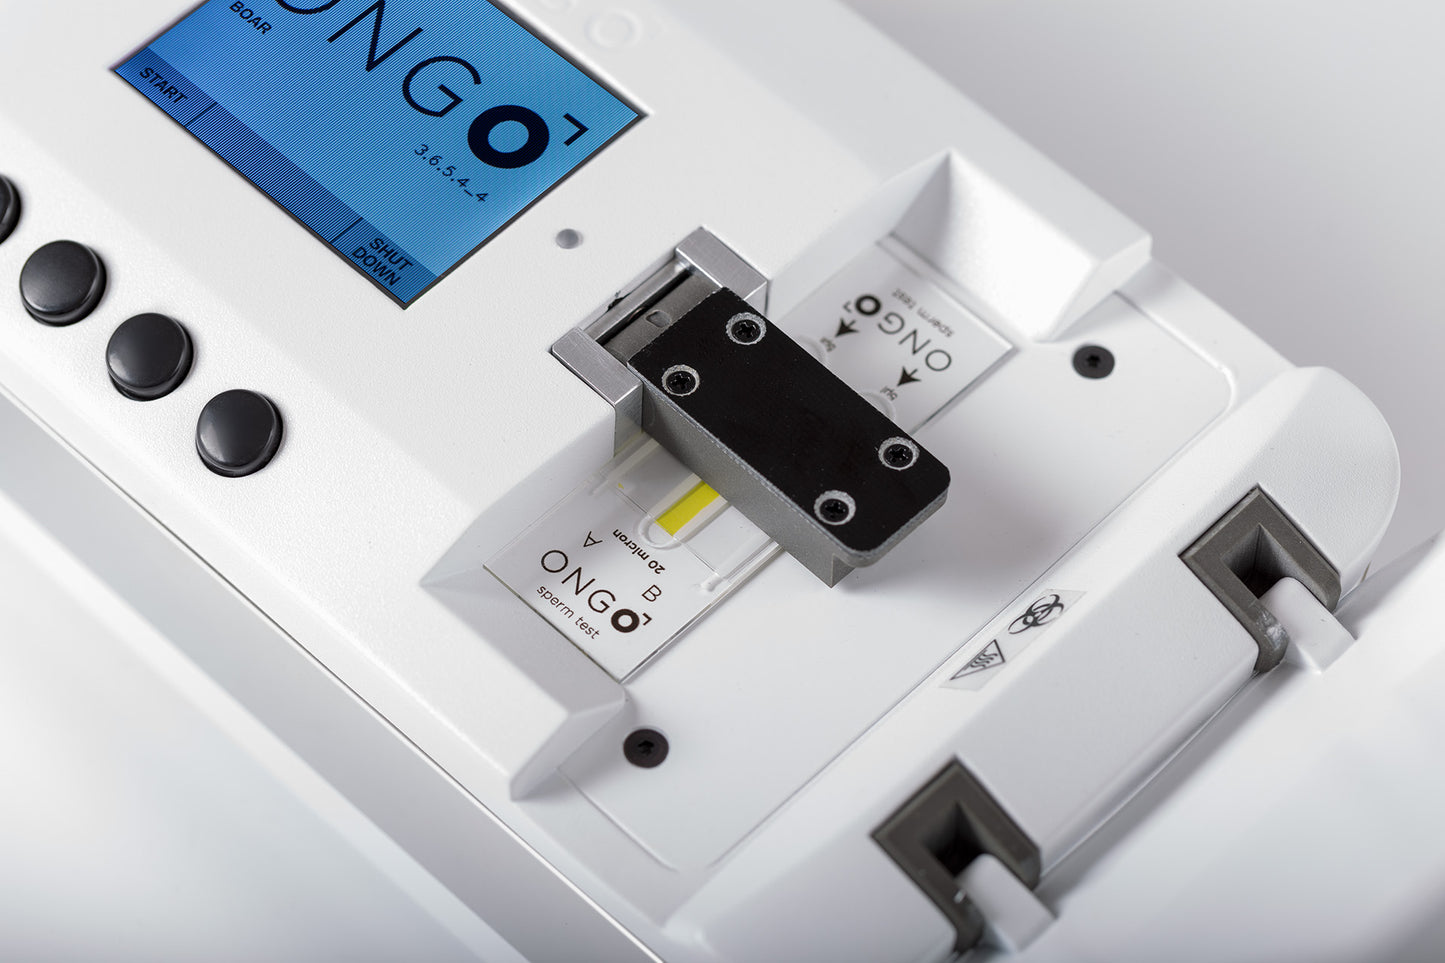 ONGO COMPACT - Starter Kit (Mobile semen analyzer - the real game changer)